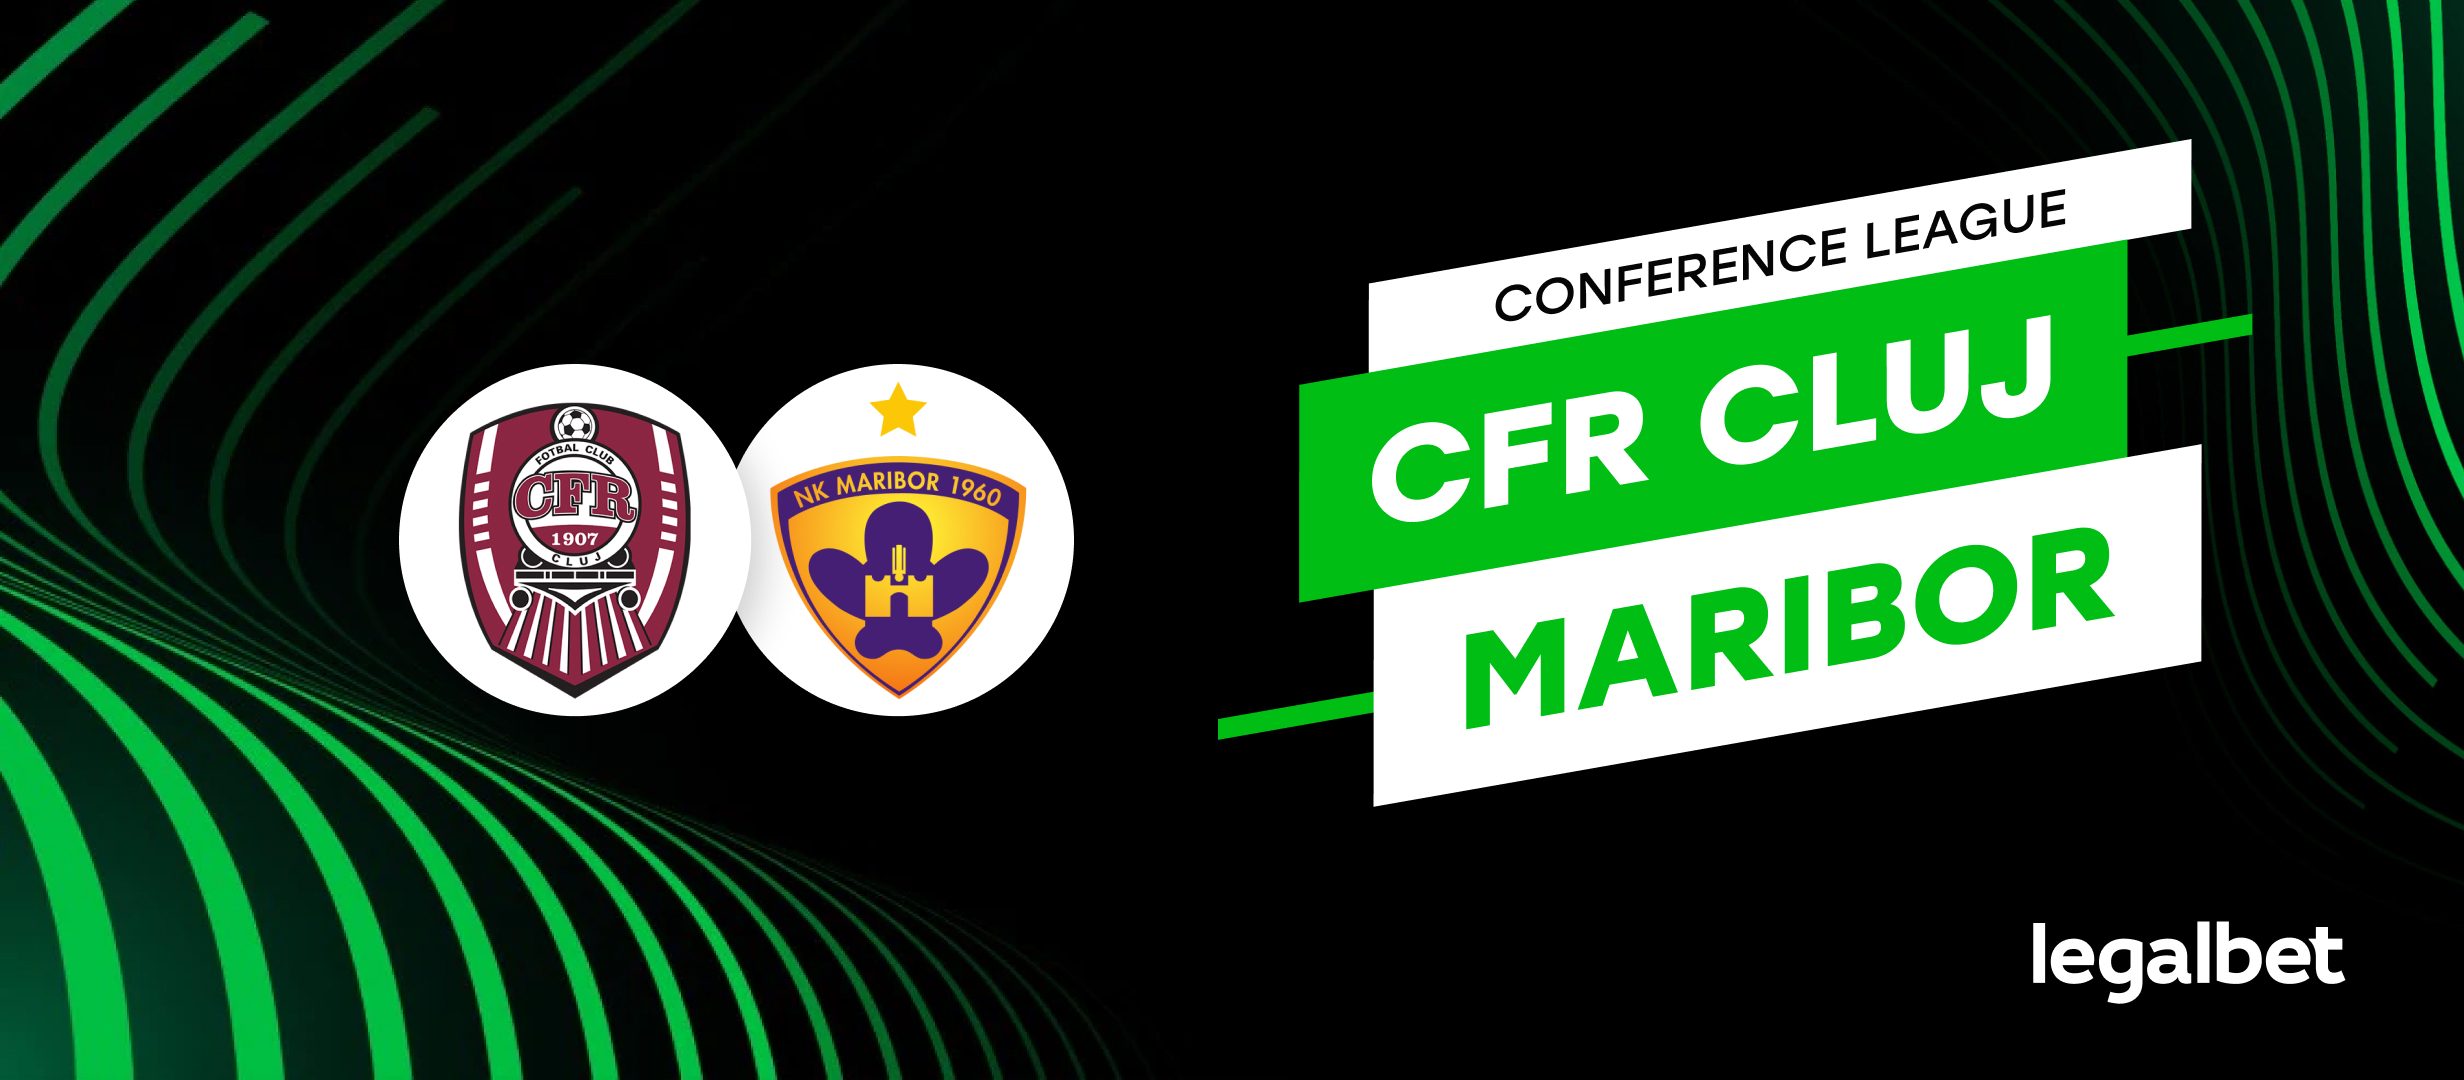 CFR Cluj vs Maribor – cote la pariuri, ponturi si informatii